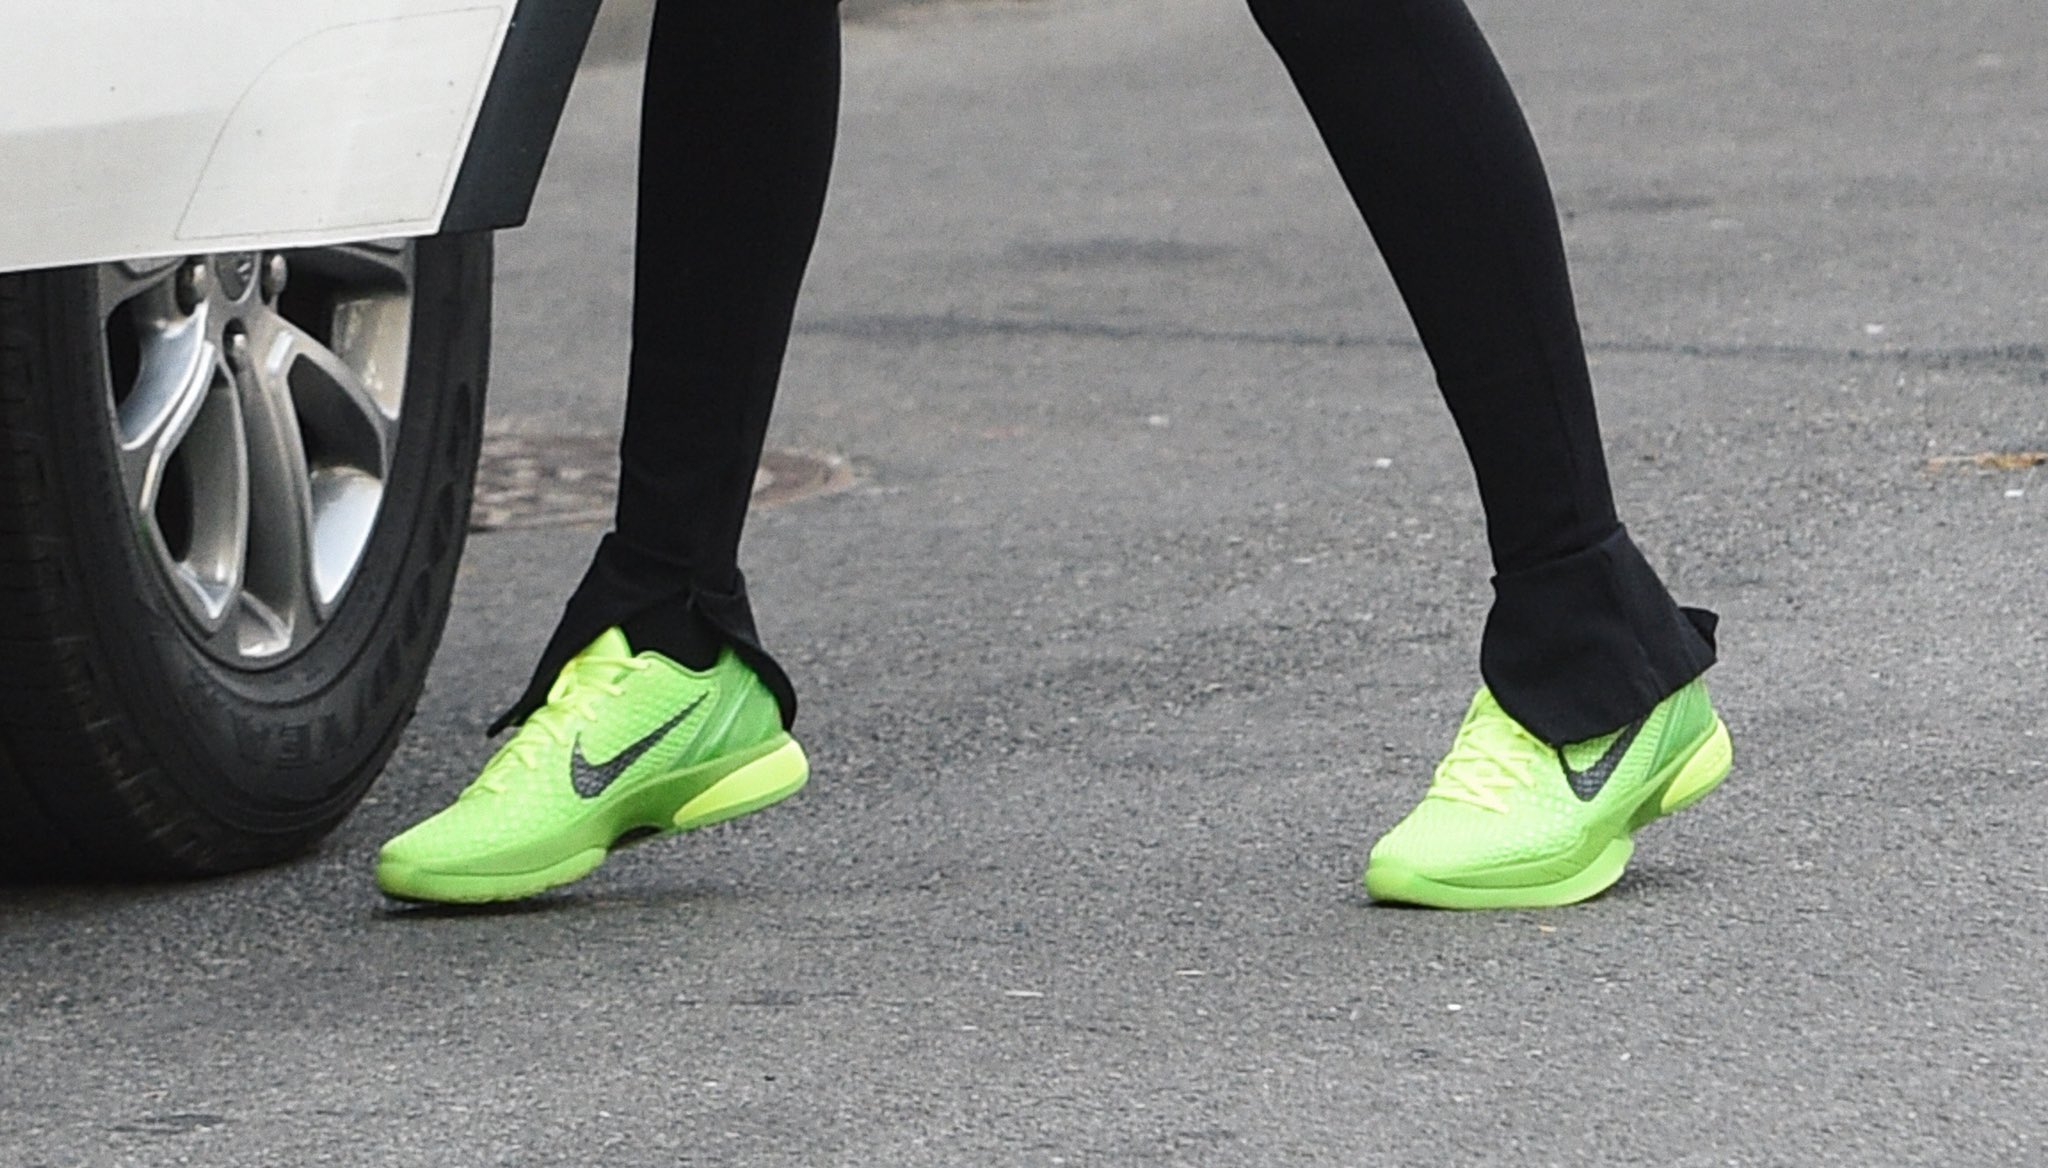 B/R Kicks on X: .@sabrina_i20 wearing the Nike Kobe 6 Protro